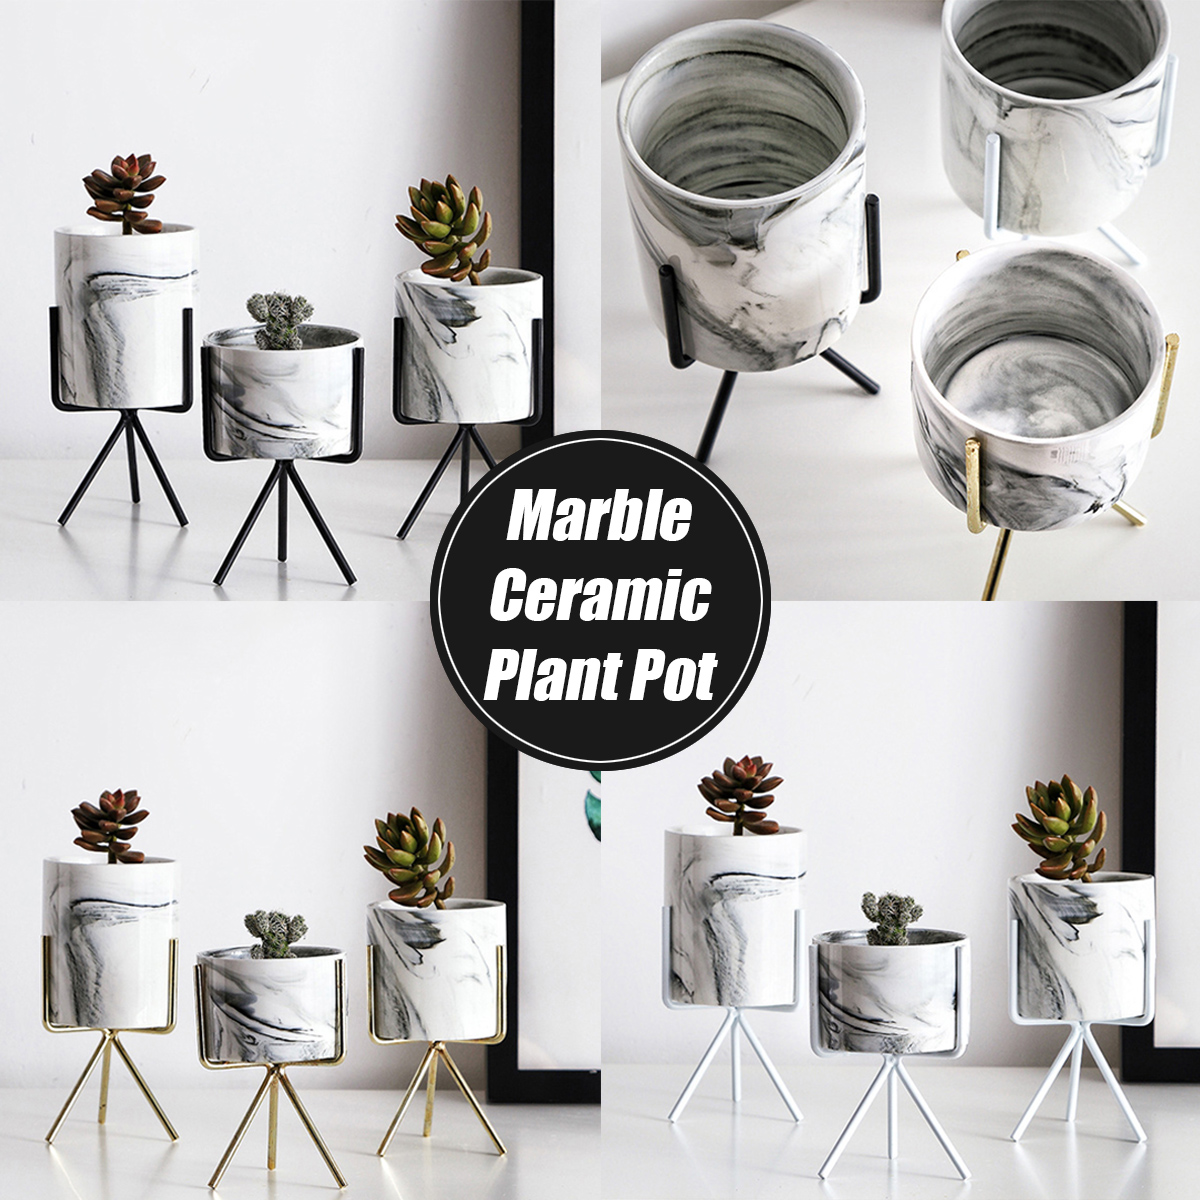 SML-Nordic-Style-Flower-Pot-Iron-Wire-Metal-Rack-Marble-Ceramic-Succulent-Plant-Pot-Cactus-Decoratio-1549980-1